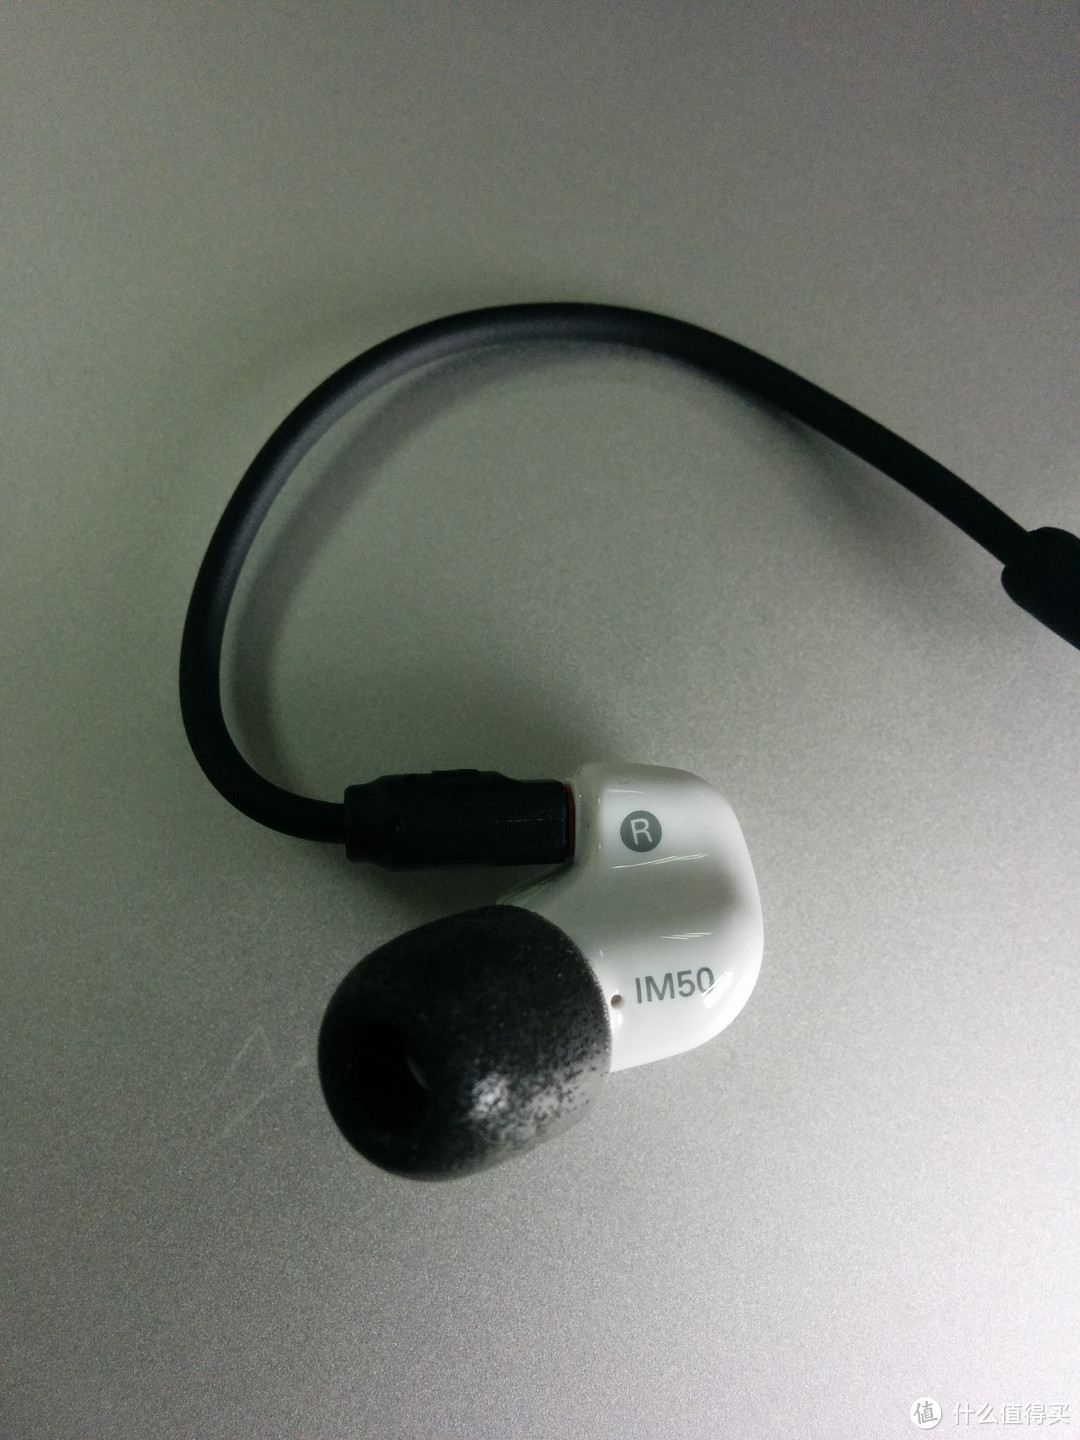 audio-technica 铁三角 ATH-im50 入耳式耳机